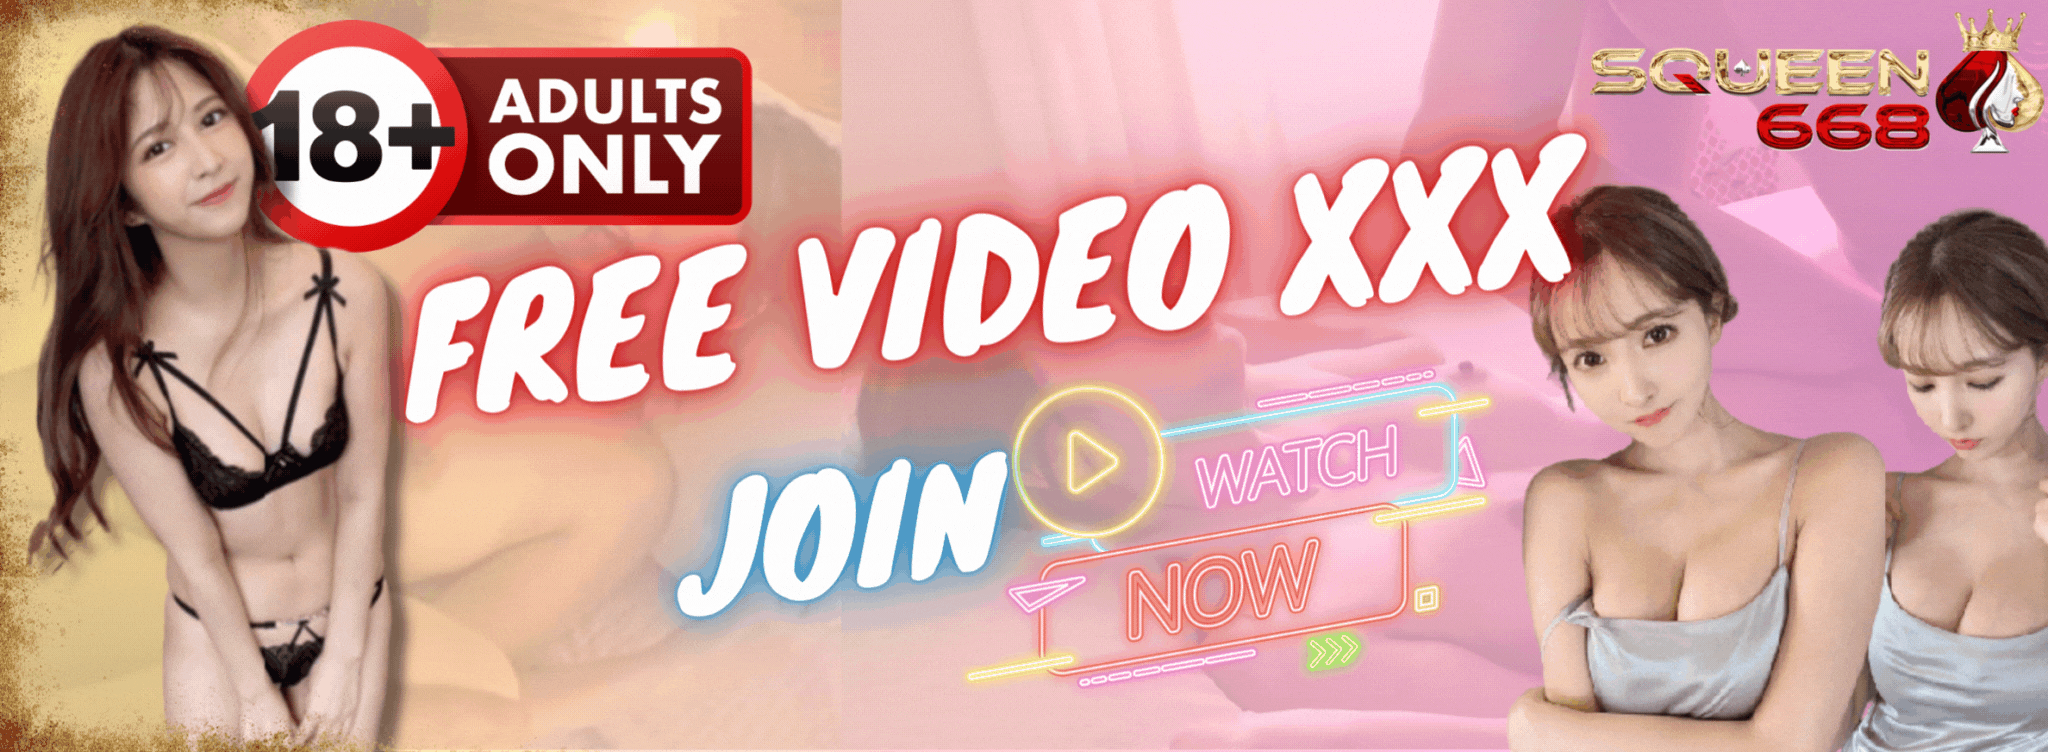 Free Video XXX